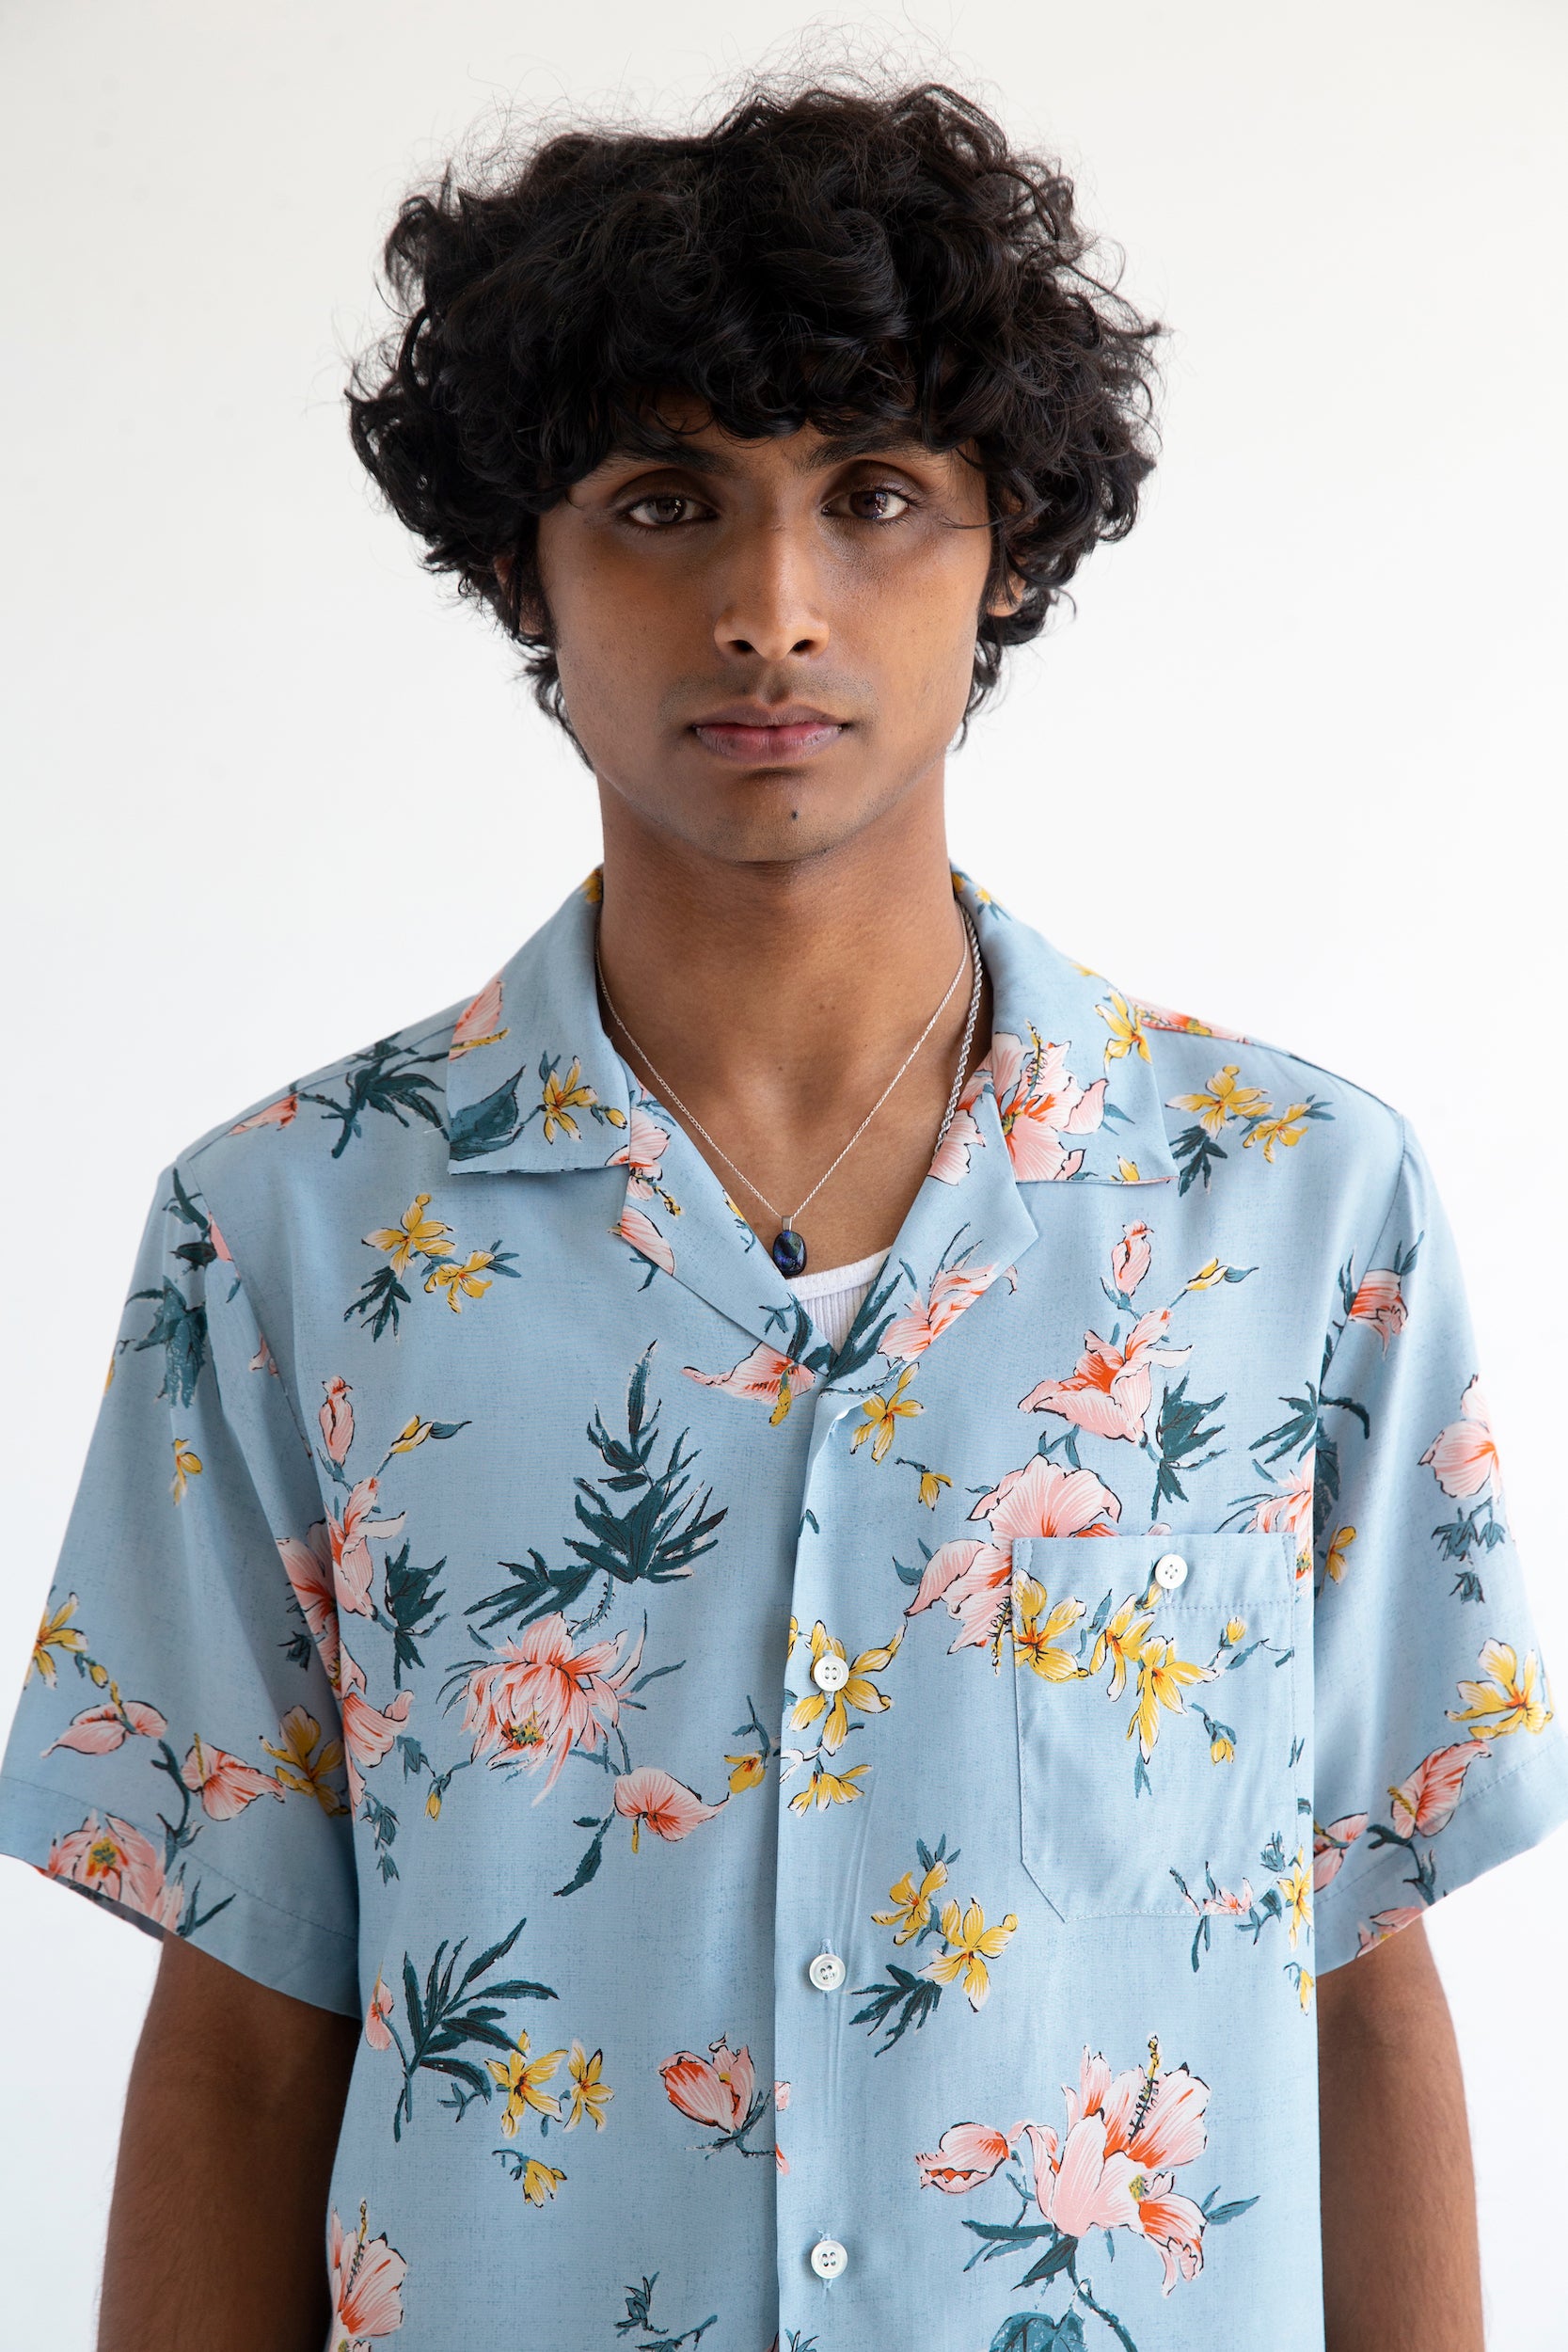 collar detail of light blue floral printed shirt